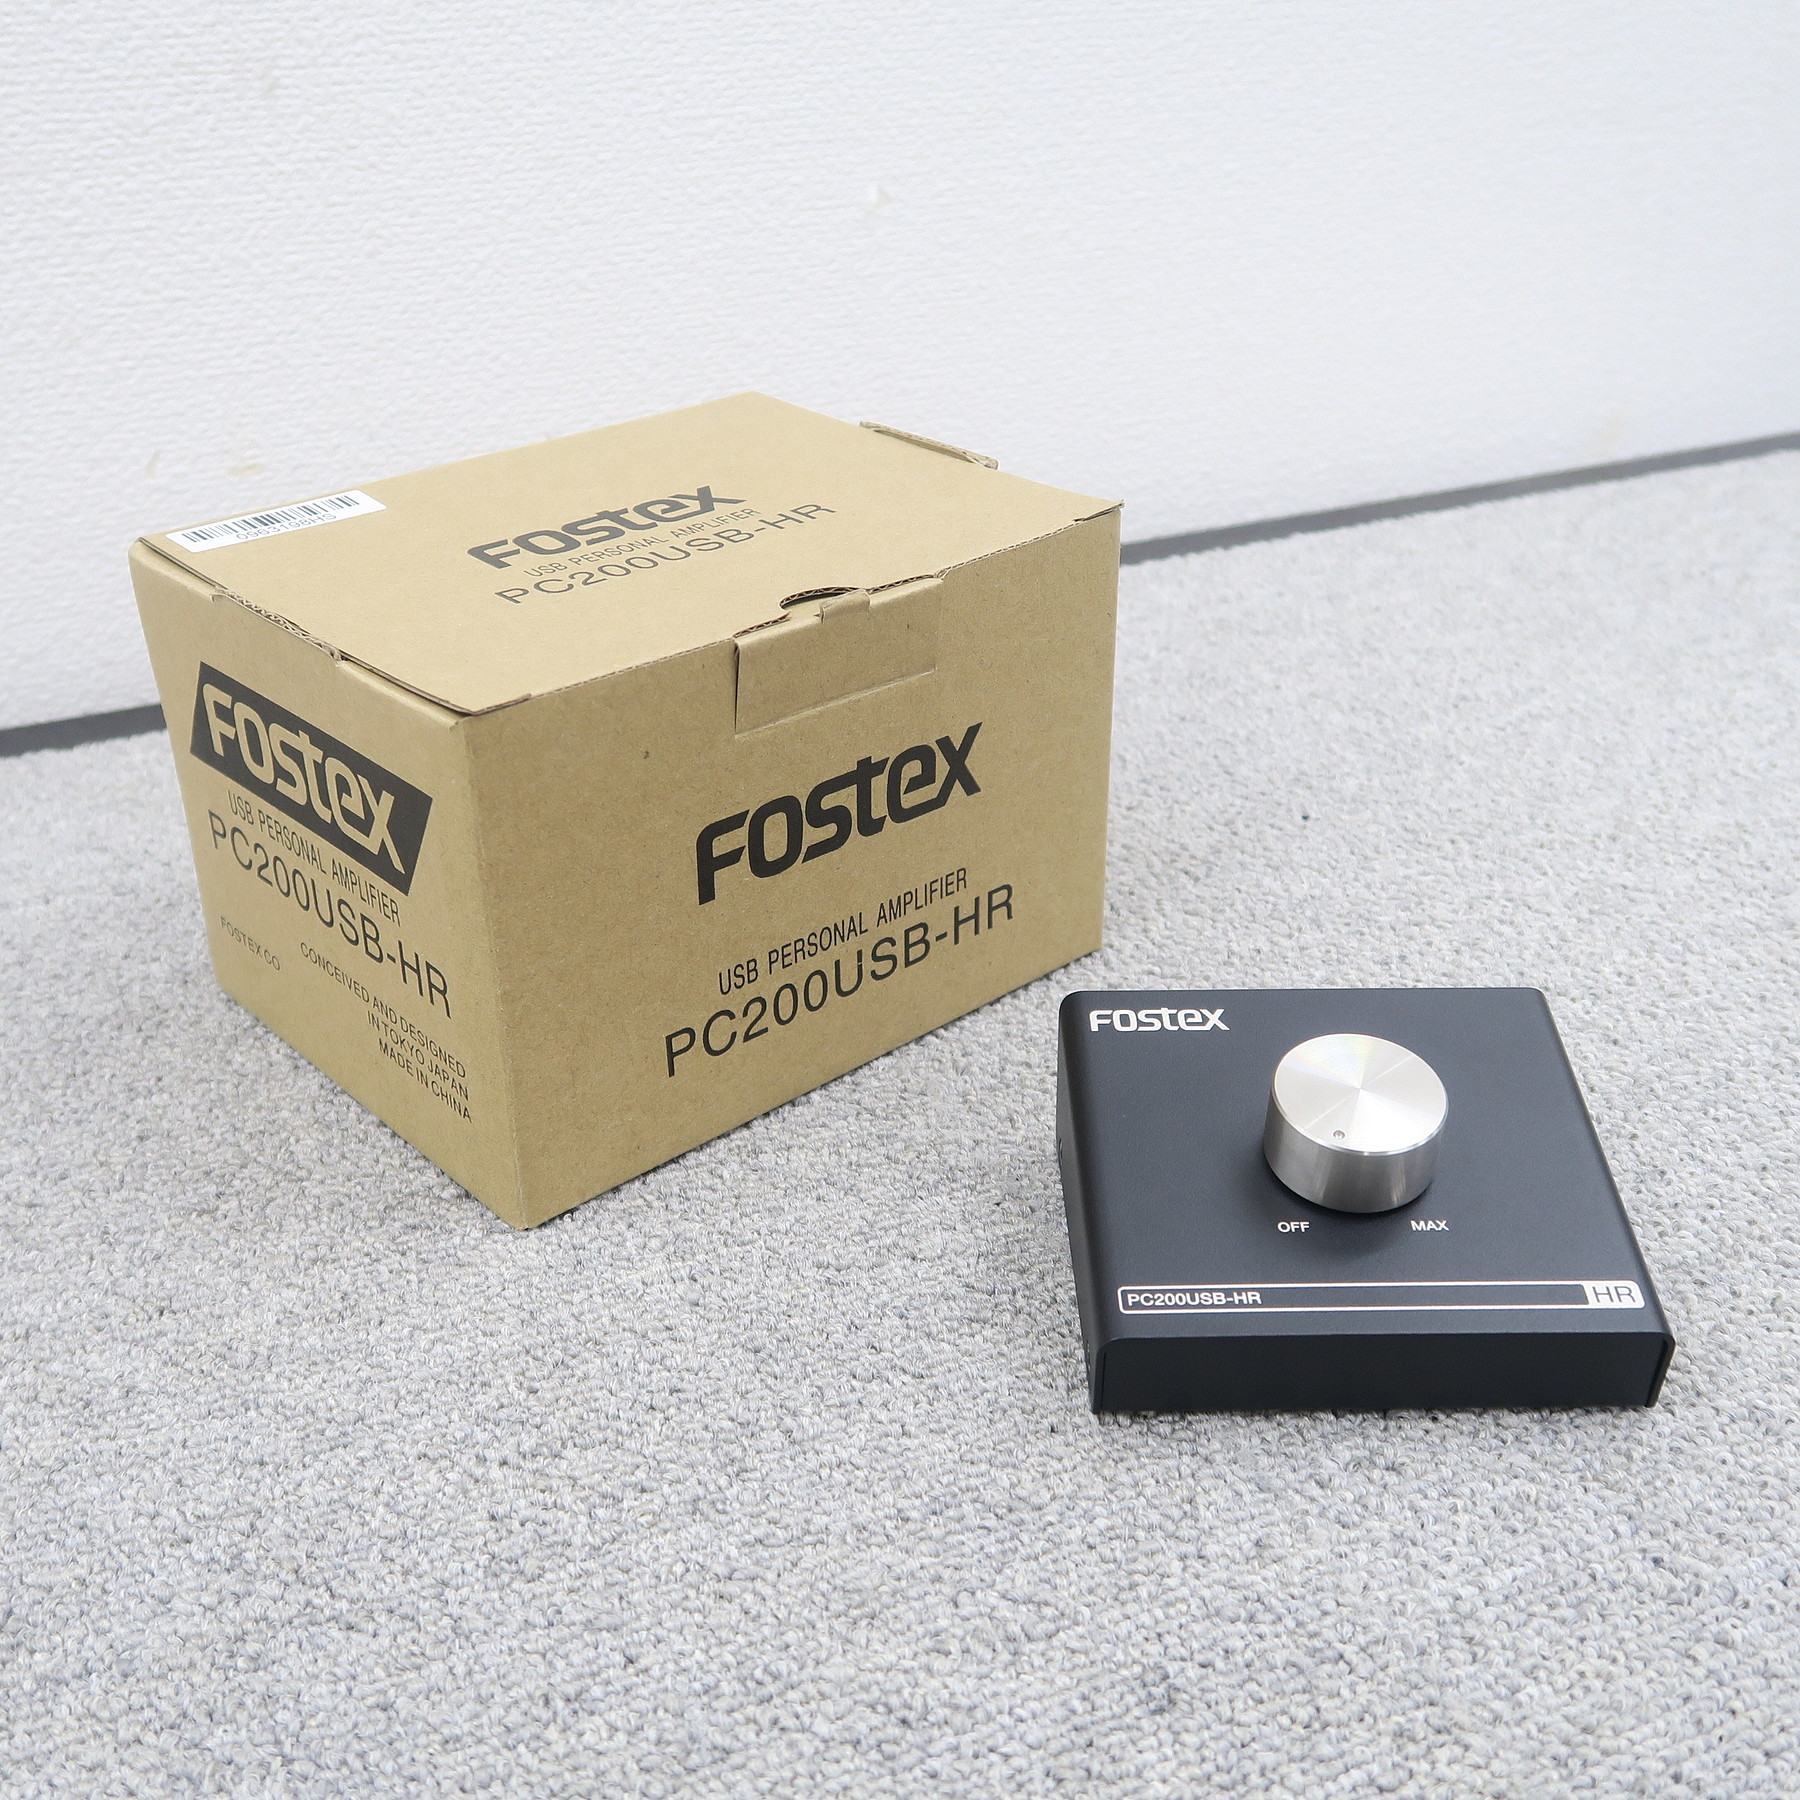 FOSTEX PC200USB-HR ハイレゾ対応DAC内蔵パーソナルアンプ - アンプ